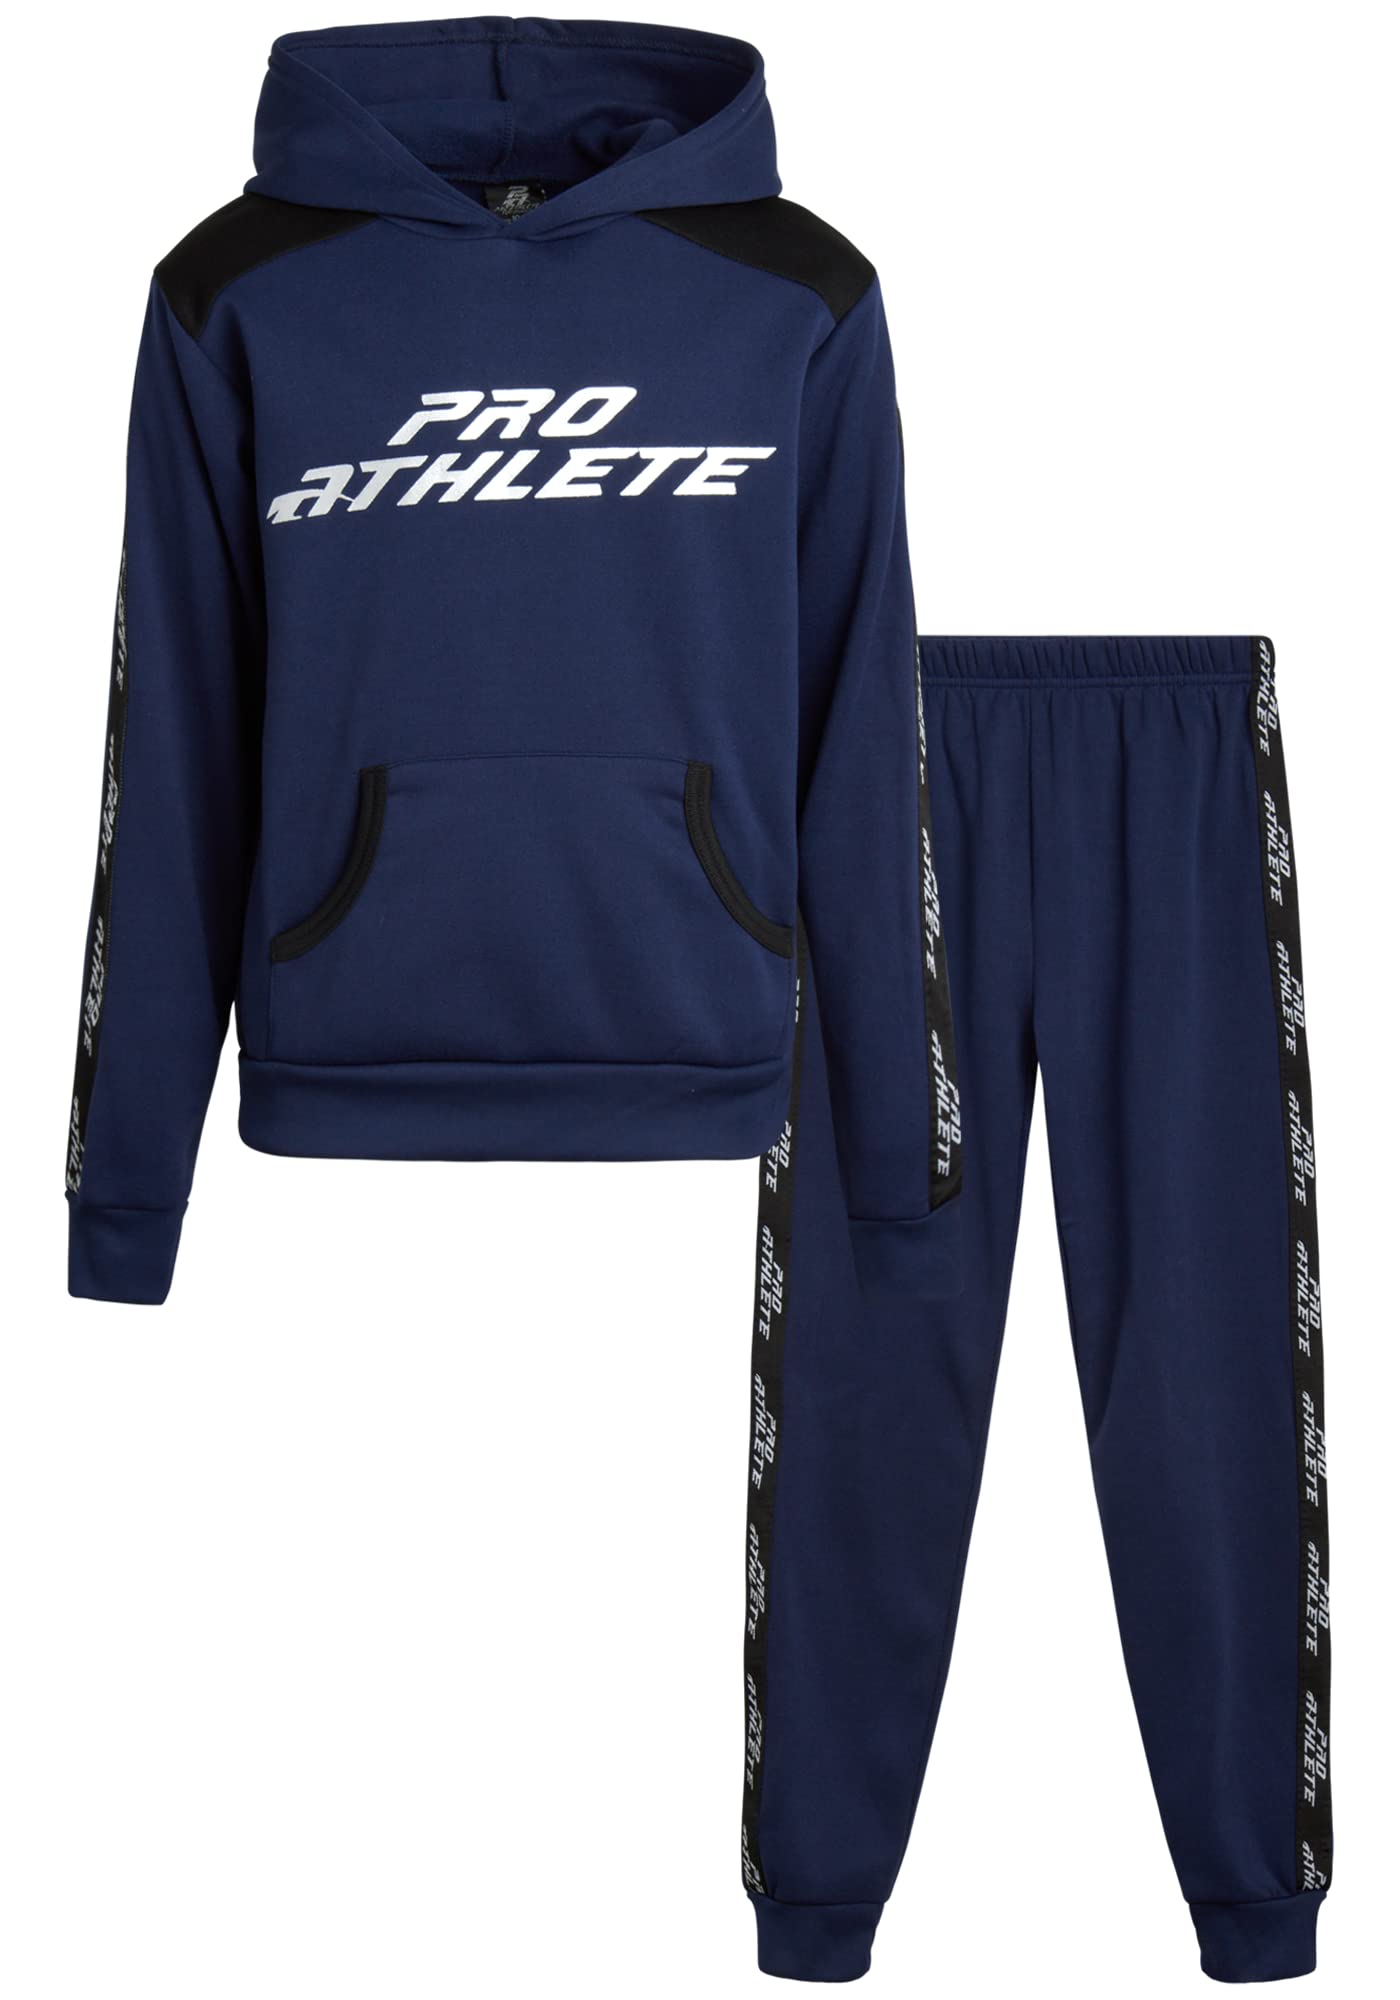 Pro Athlete Boys Sweatsuit Set - 2 Piece Fleece Pullover Hoodie and Jogger  Sweatpants (8-16) Navy 14-16